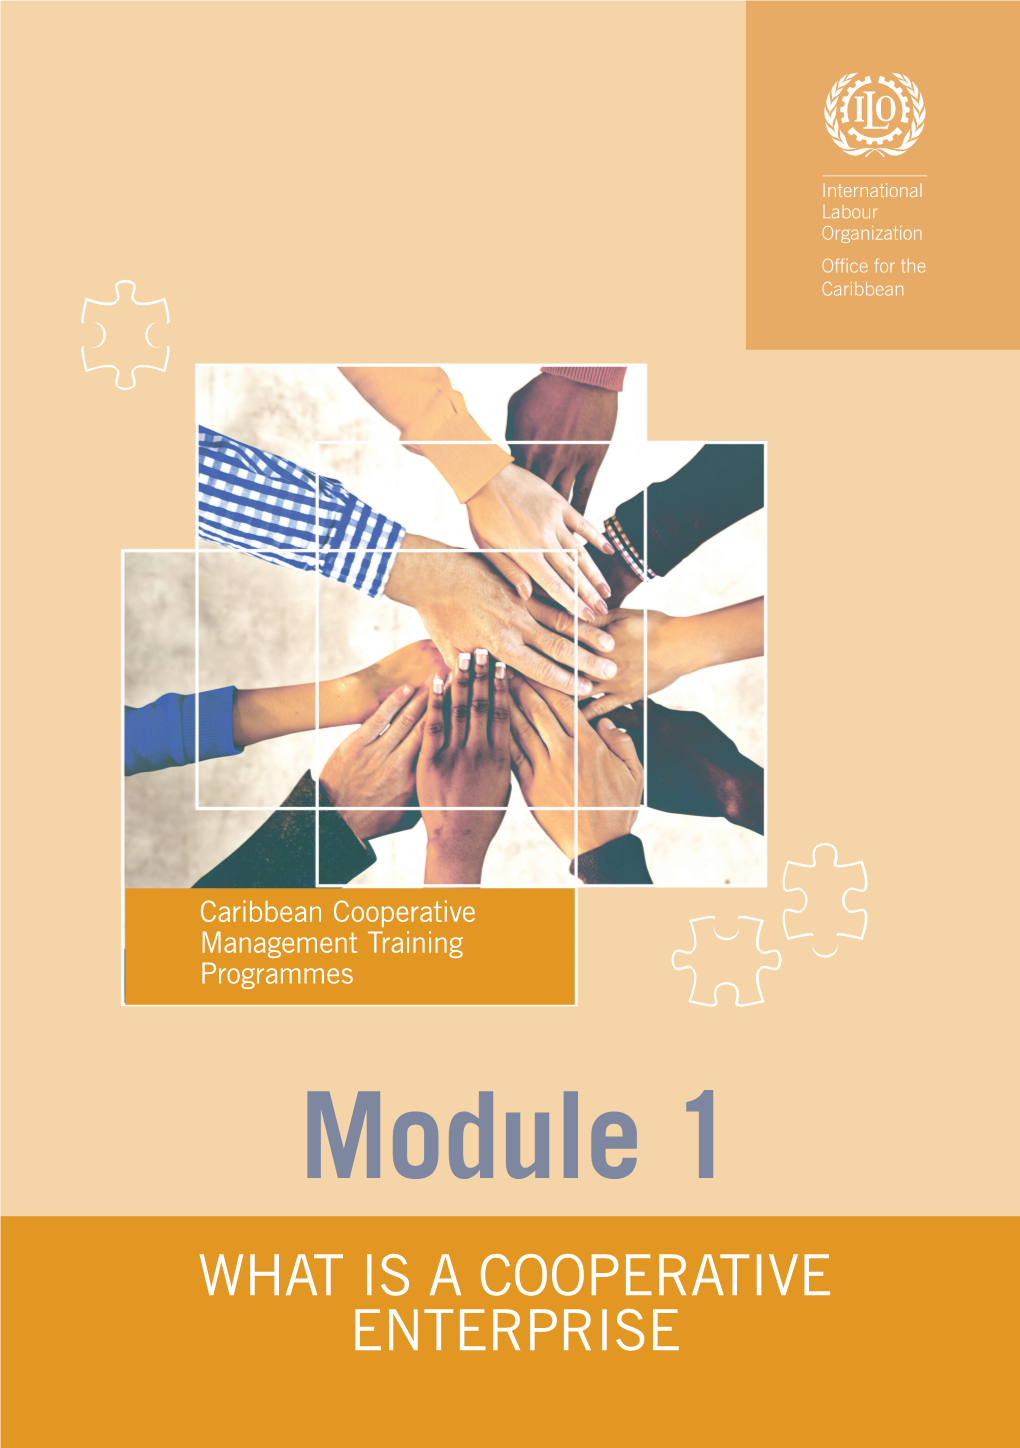 Caribbean Cooperative Management Training Programmes: Module 1